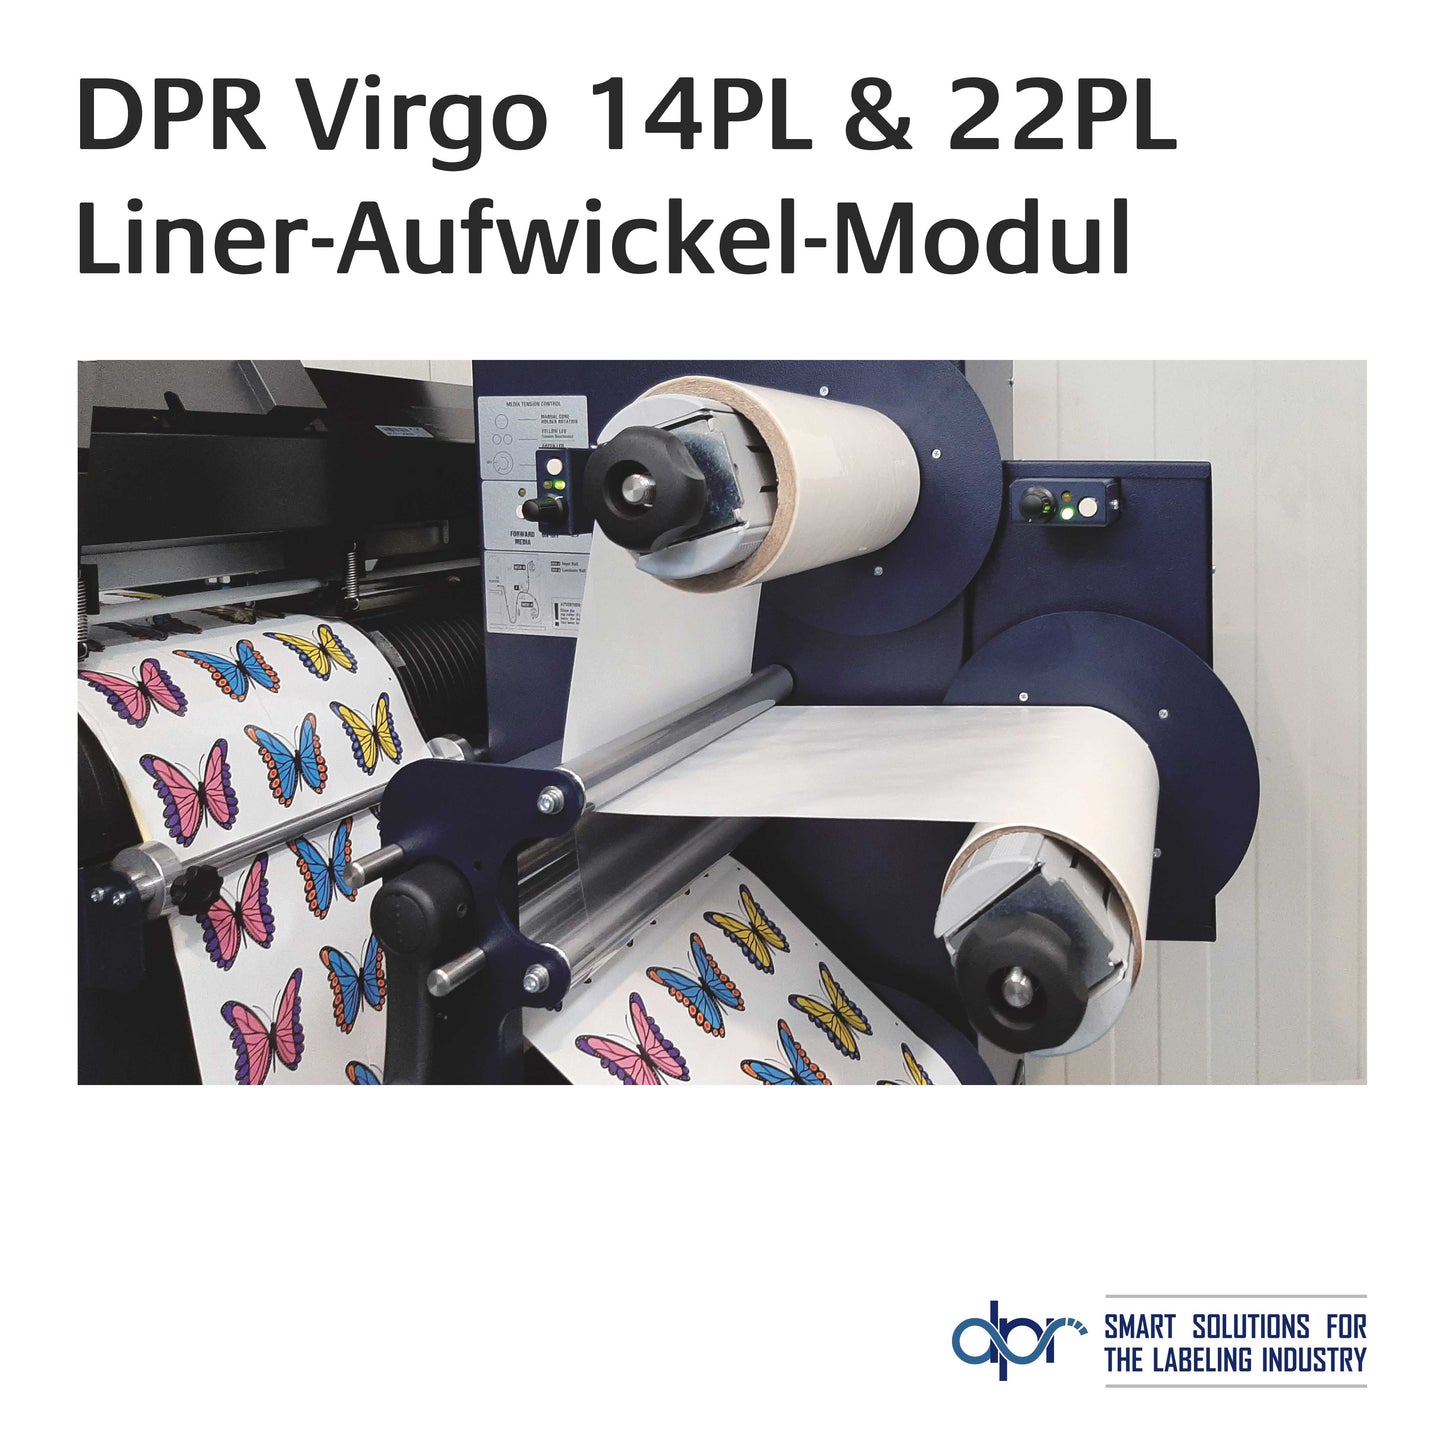 DPR VIRGO - Desktop Digital Label Finishing System Liner Aufwickel Module